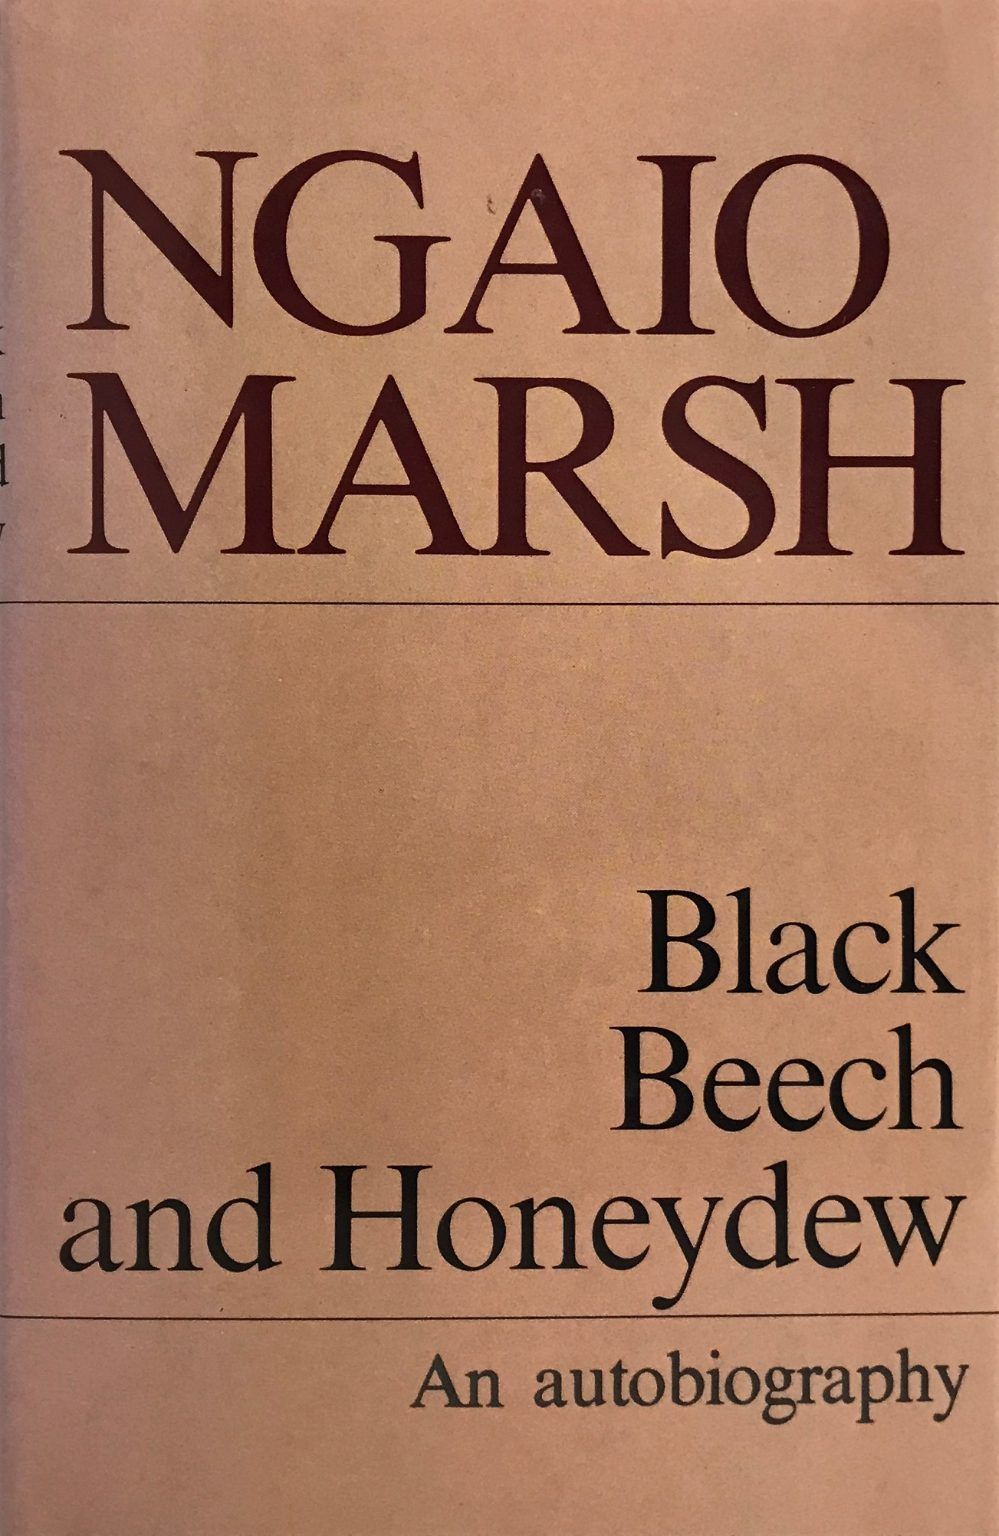 BLACK BEECH AND HONEYDEW: An Autobiography Ngaio Marsh